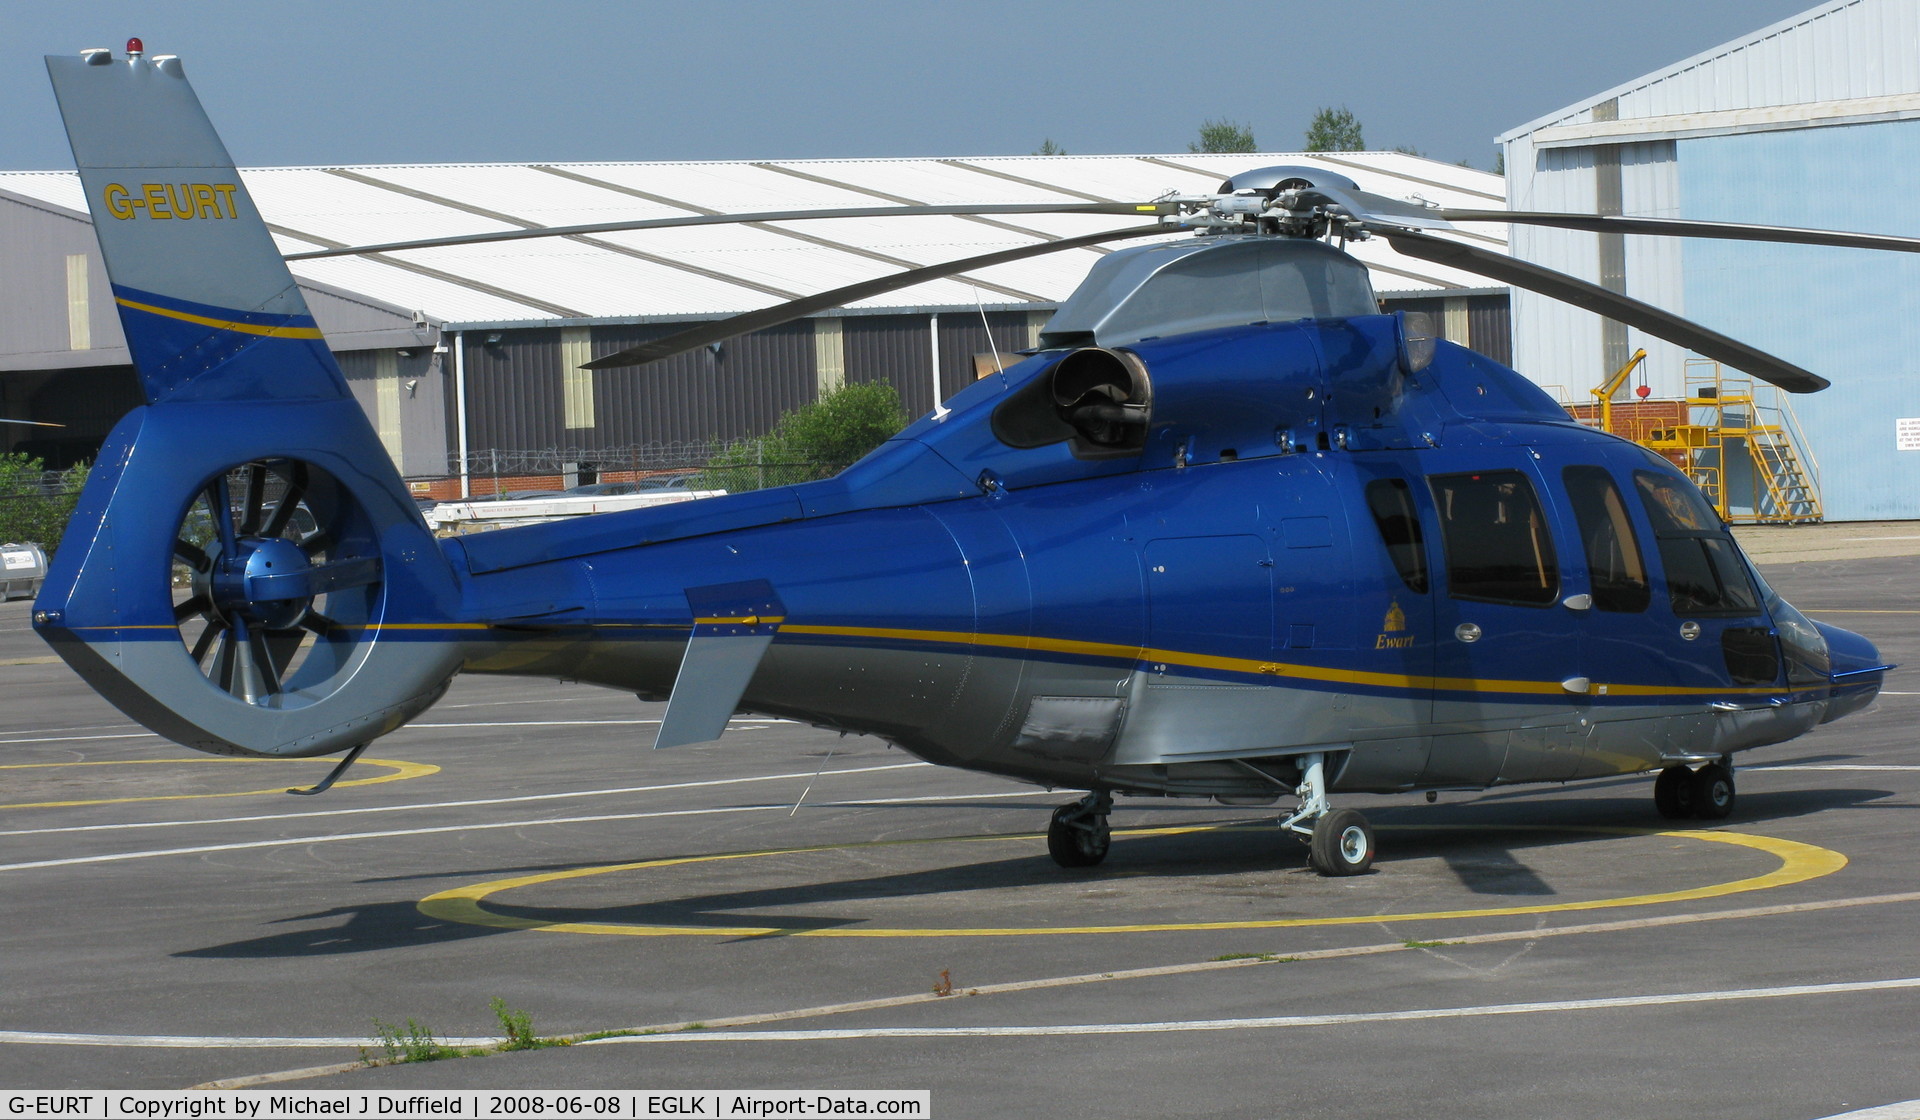 G-EURT, 2007 Eurocopter EC-155B-1 C/N 6764, Smart Eurocopter EC 155B helicopter at Blackbushe on 8th June 2008